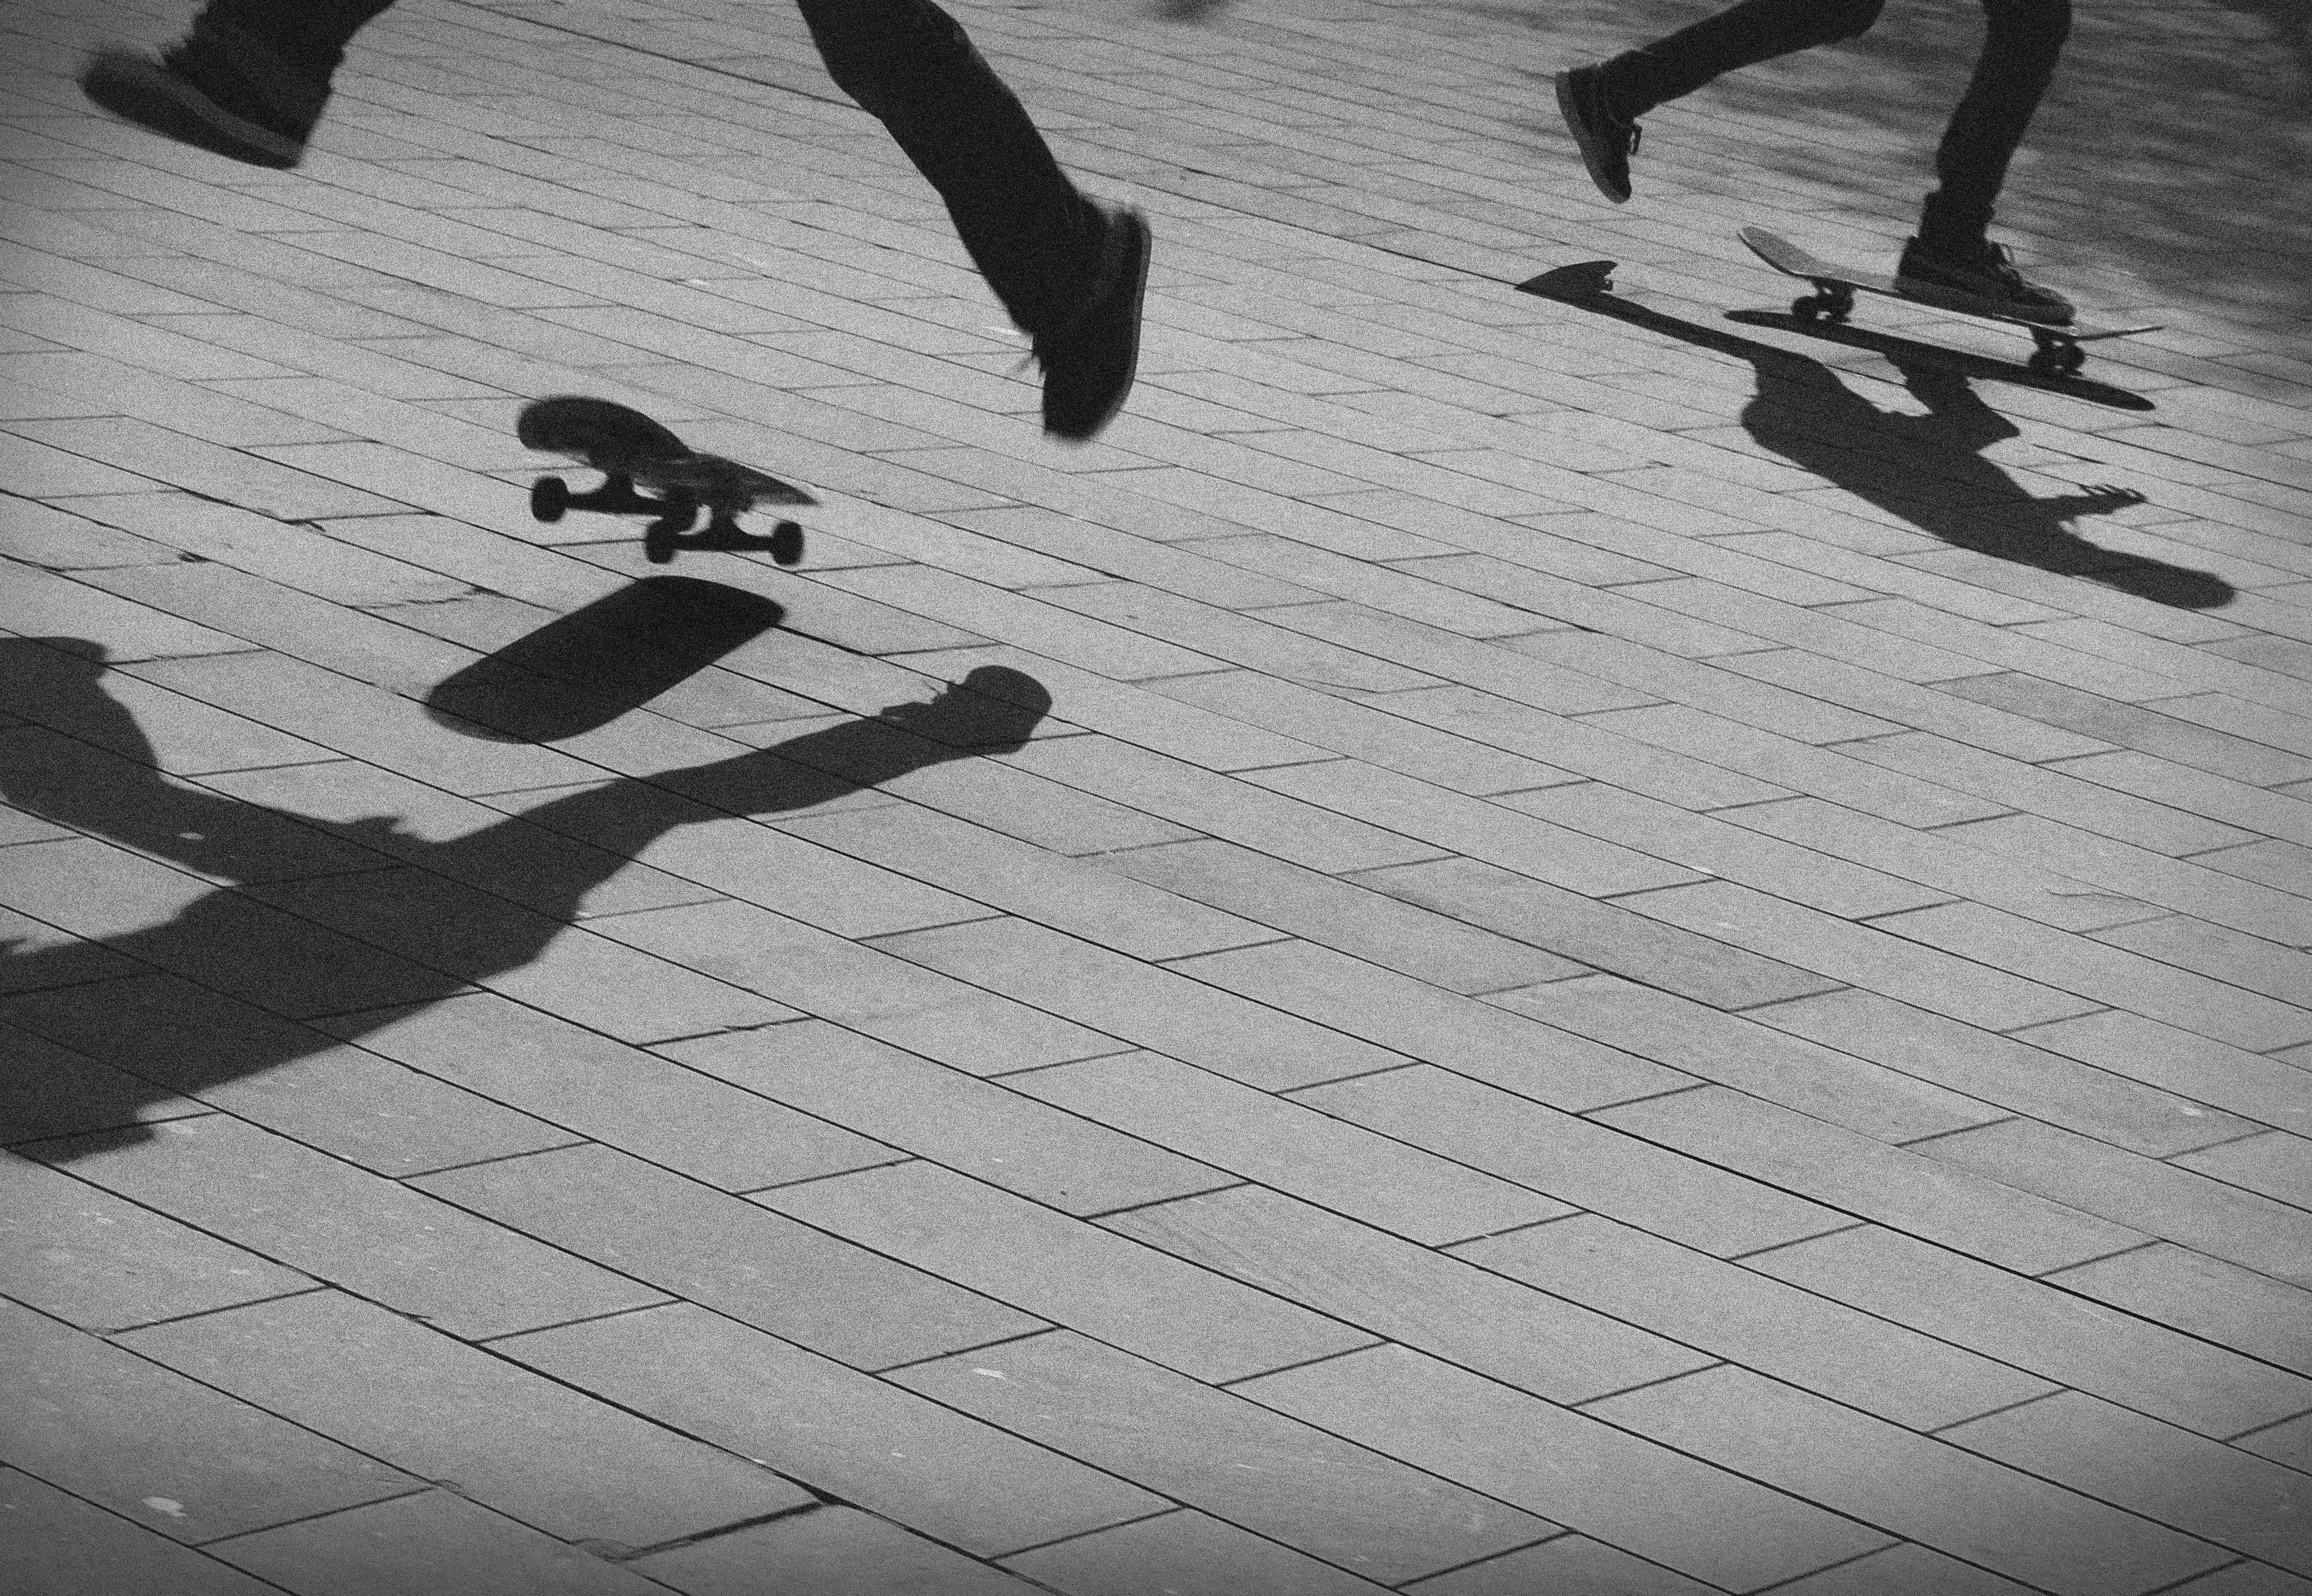 Skateboarding 4k Ultra HD Wallpaper and Background Imagex3425